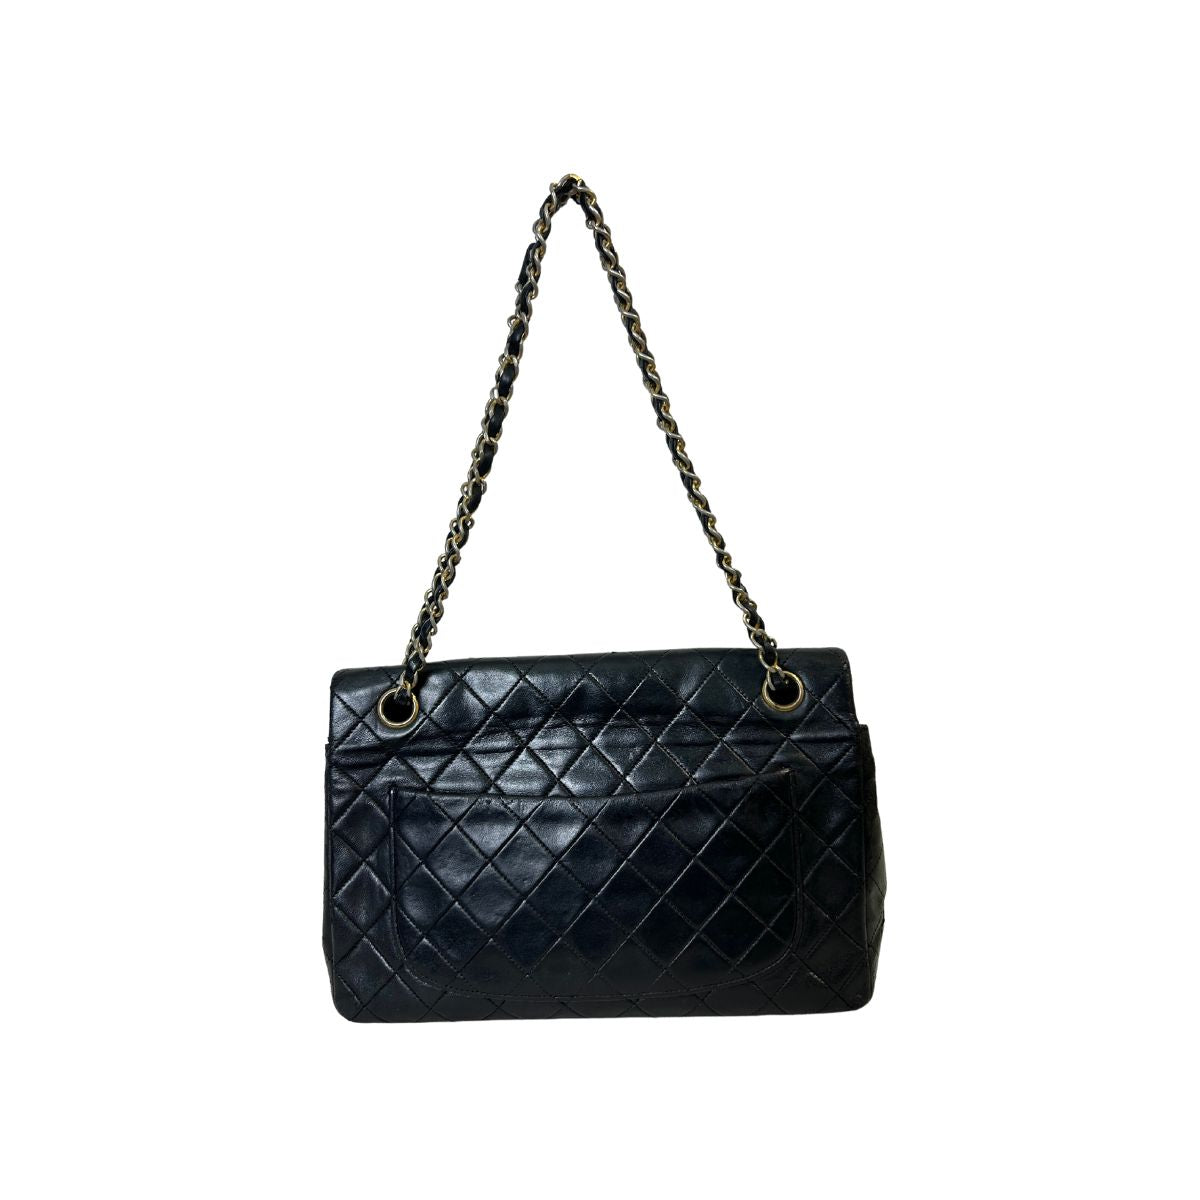 Chanel So Black Matelasse Patent Leather Single Flap Bag, Chanel Handbags